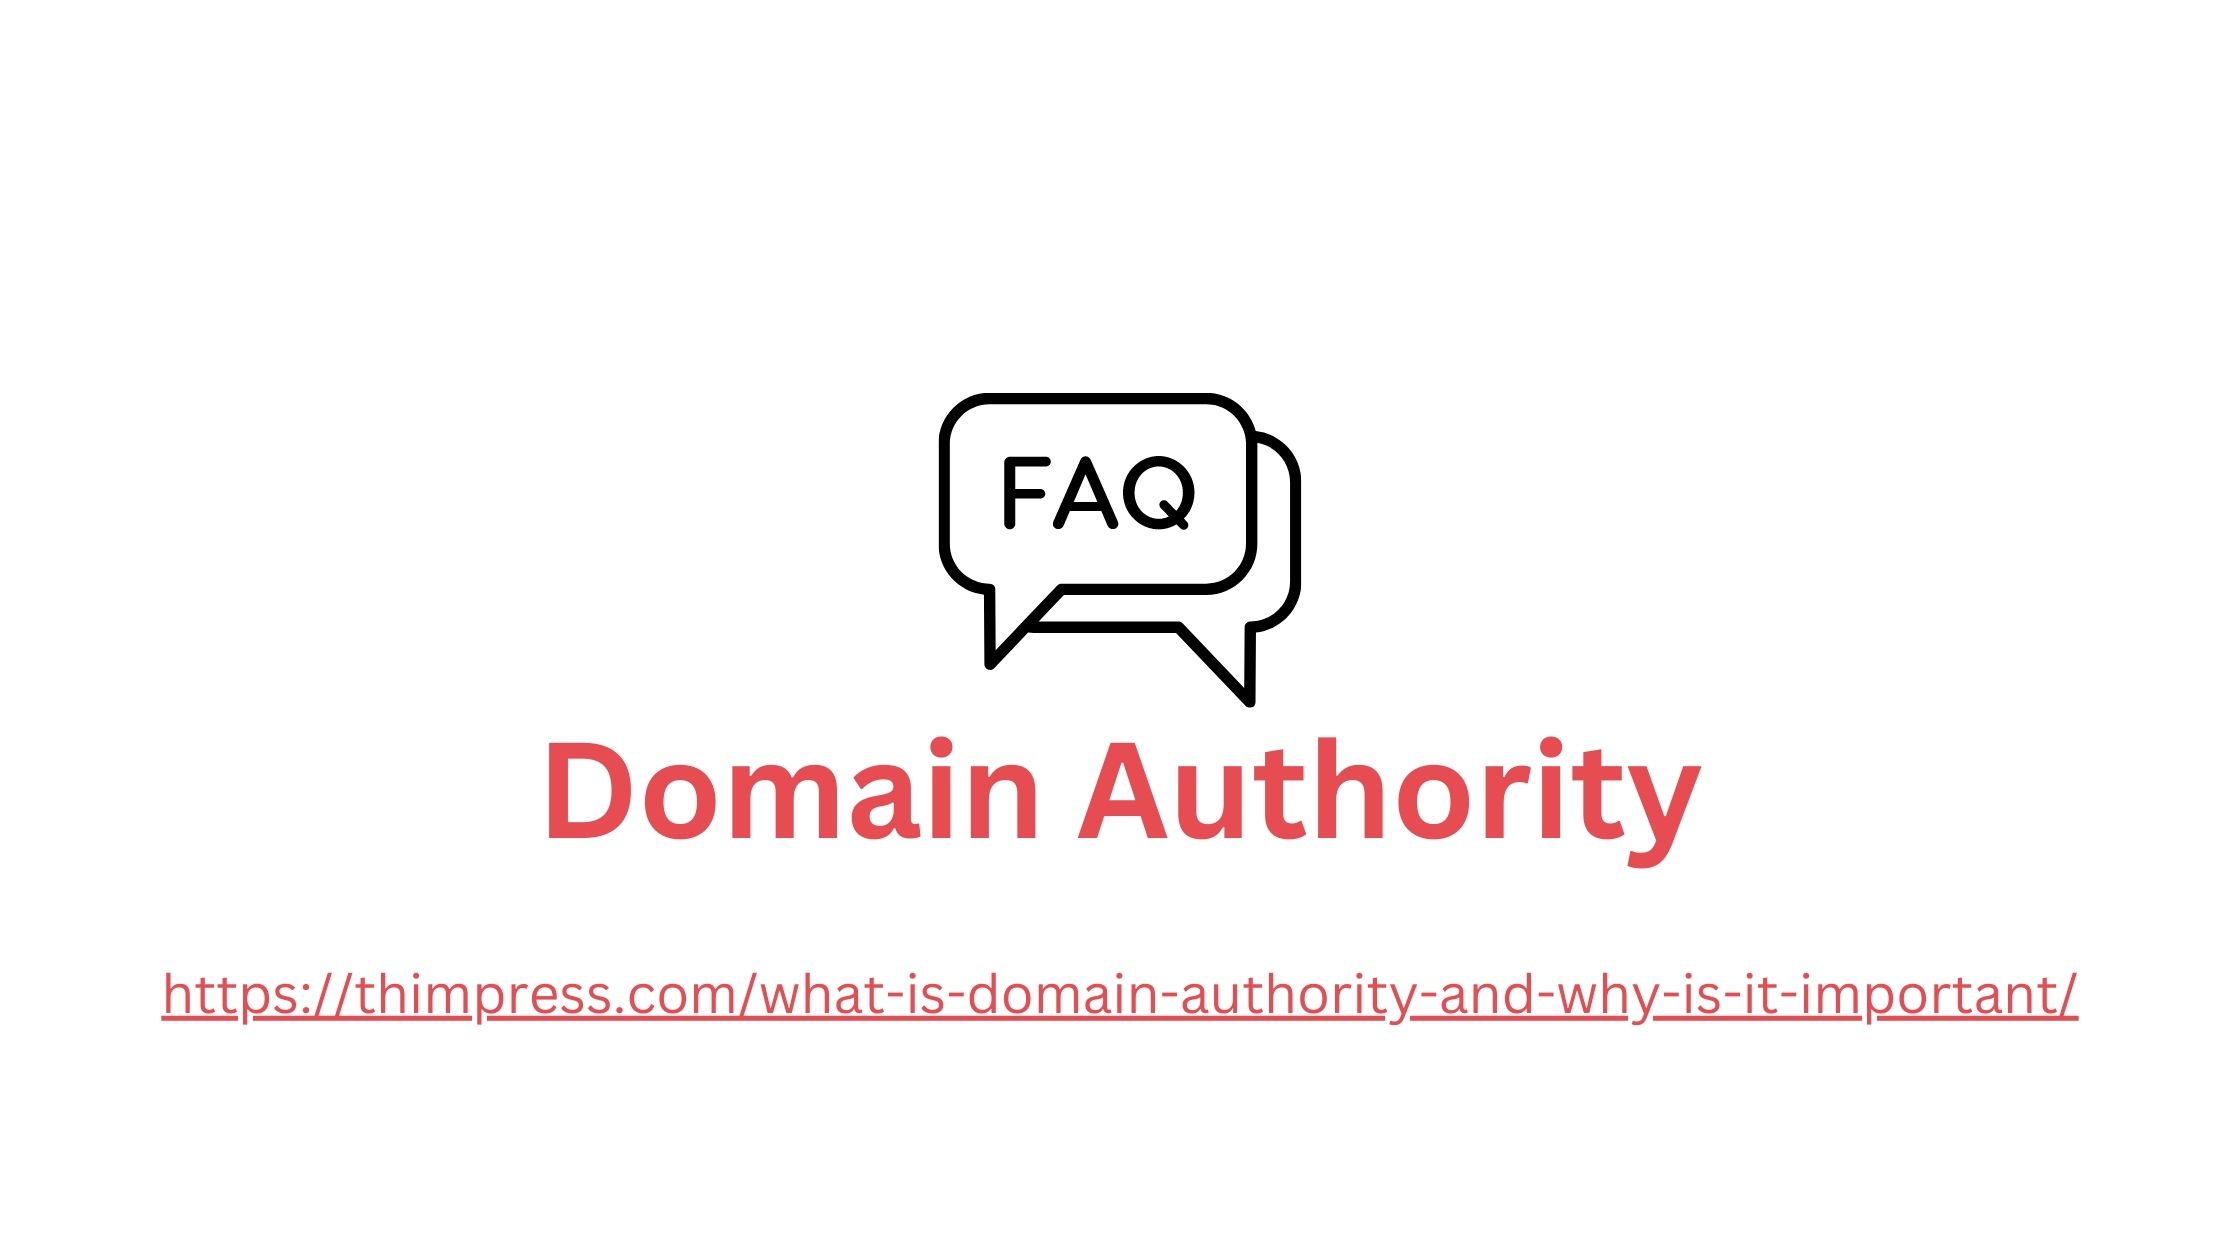 FAQ Domain Authority